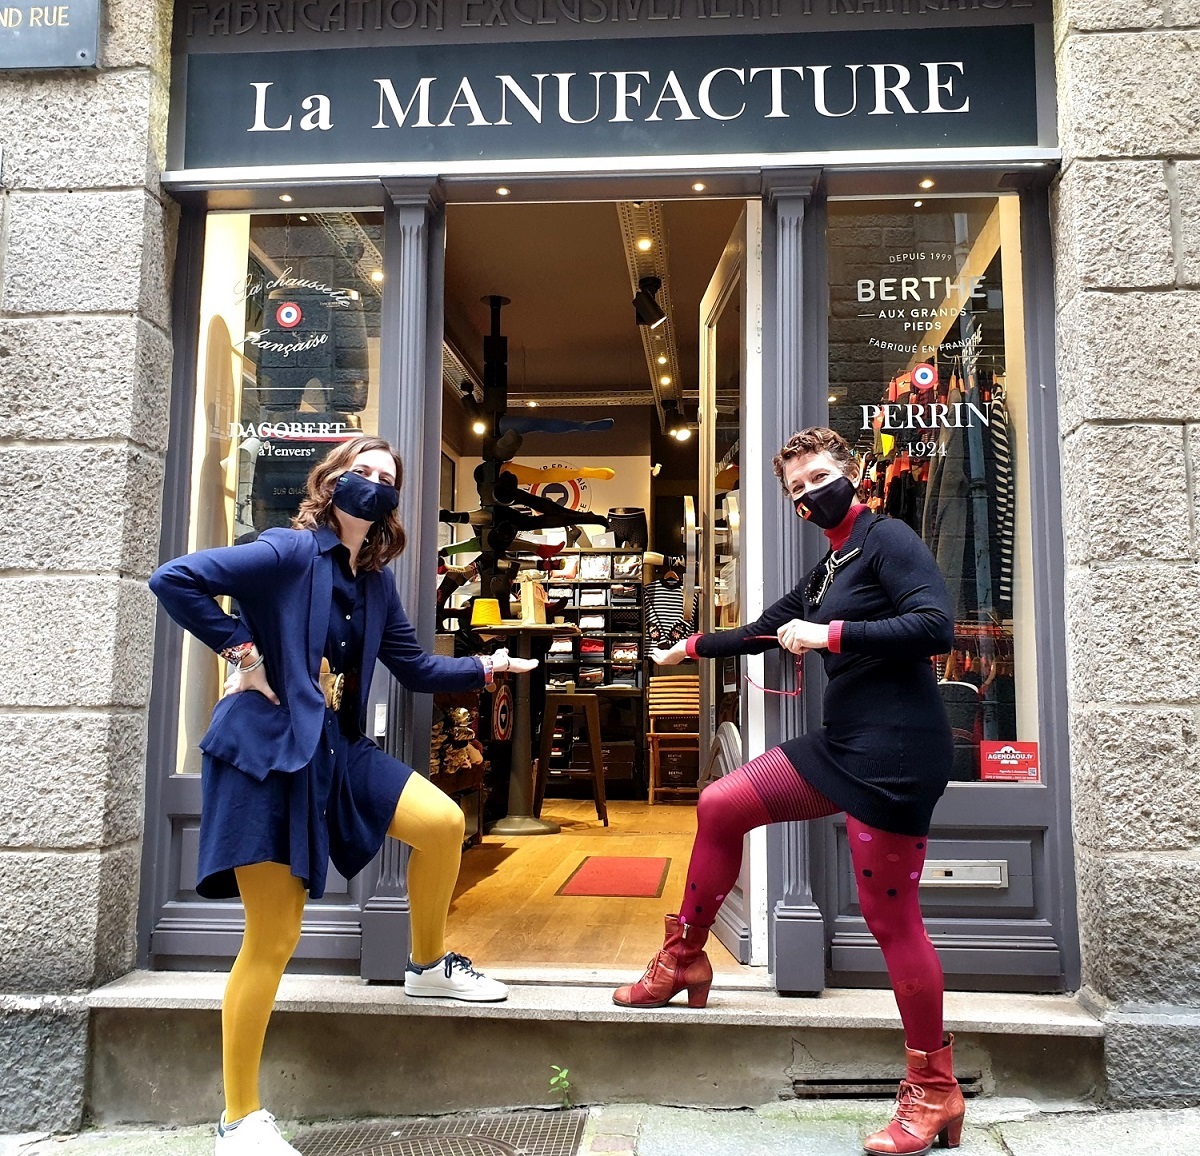 Berthe Aux Grands Pieds: Chaussettes et Collants 100 % Made In France